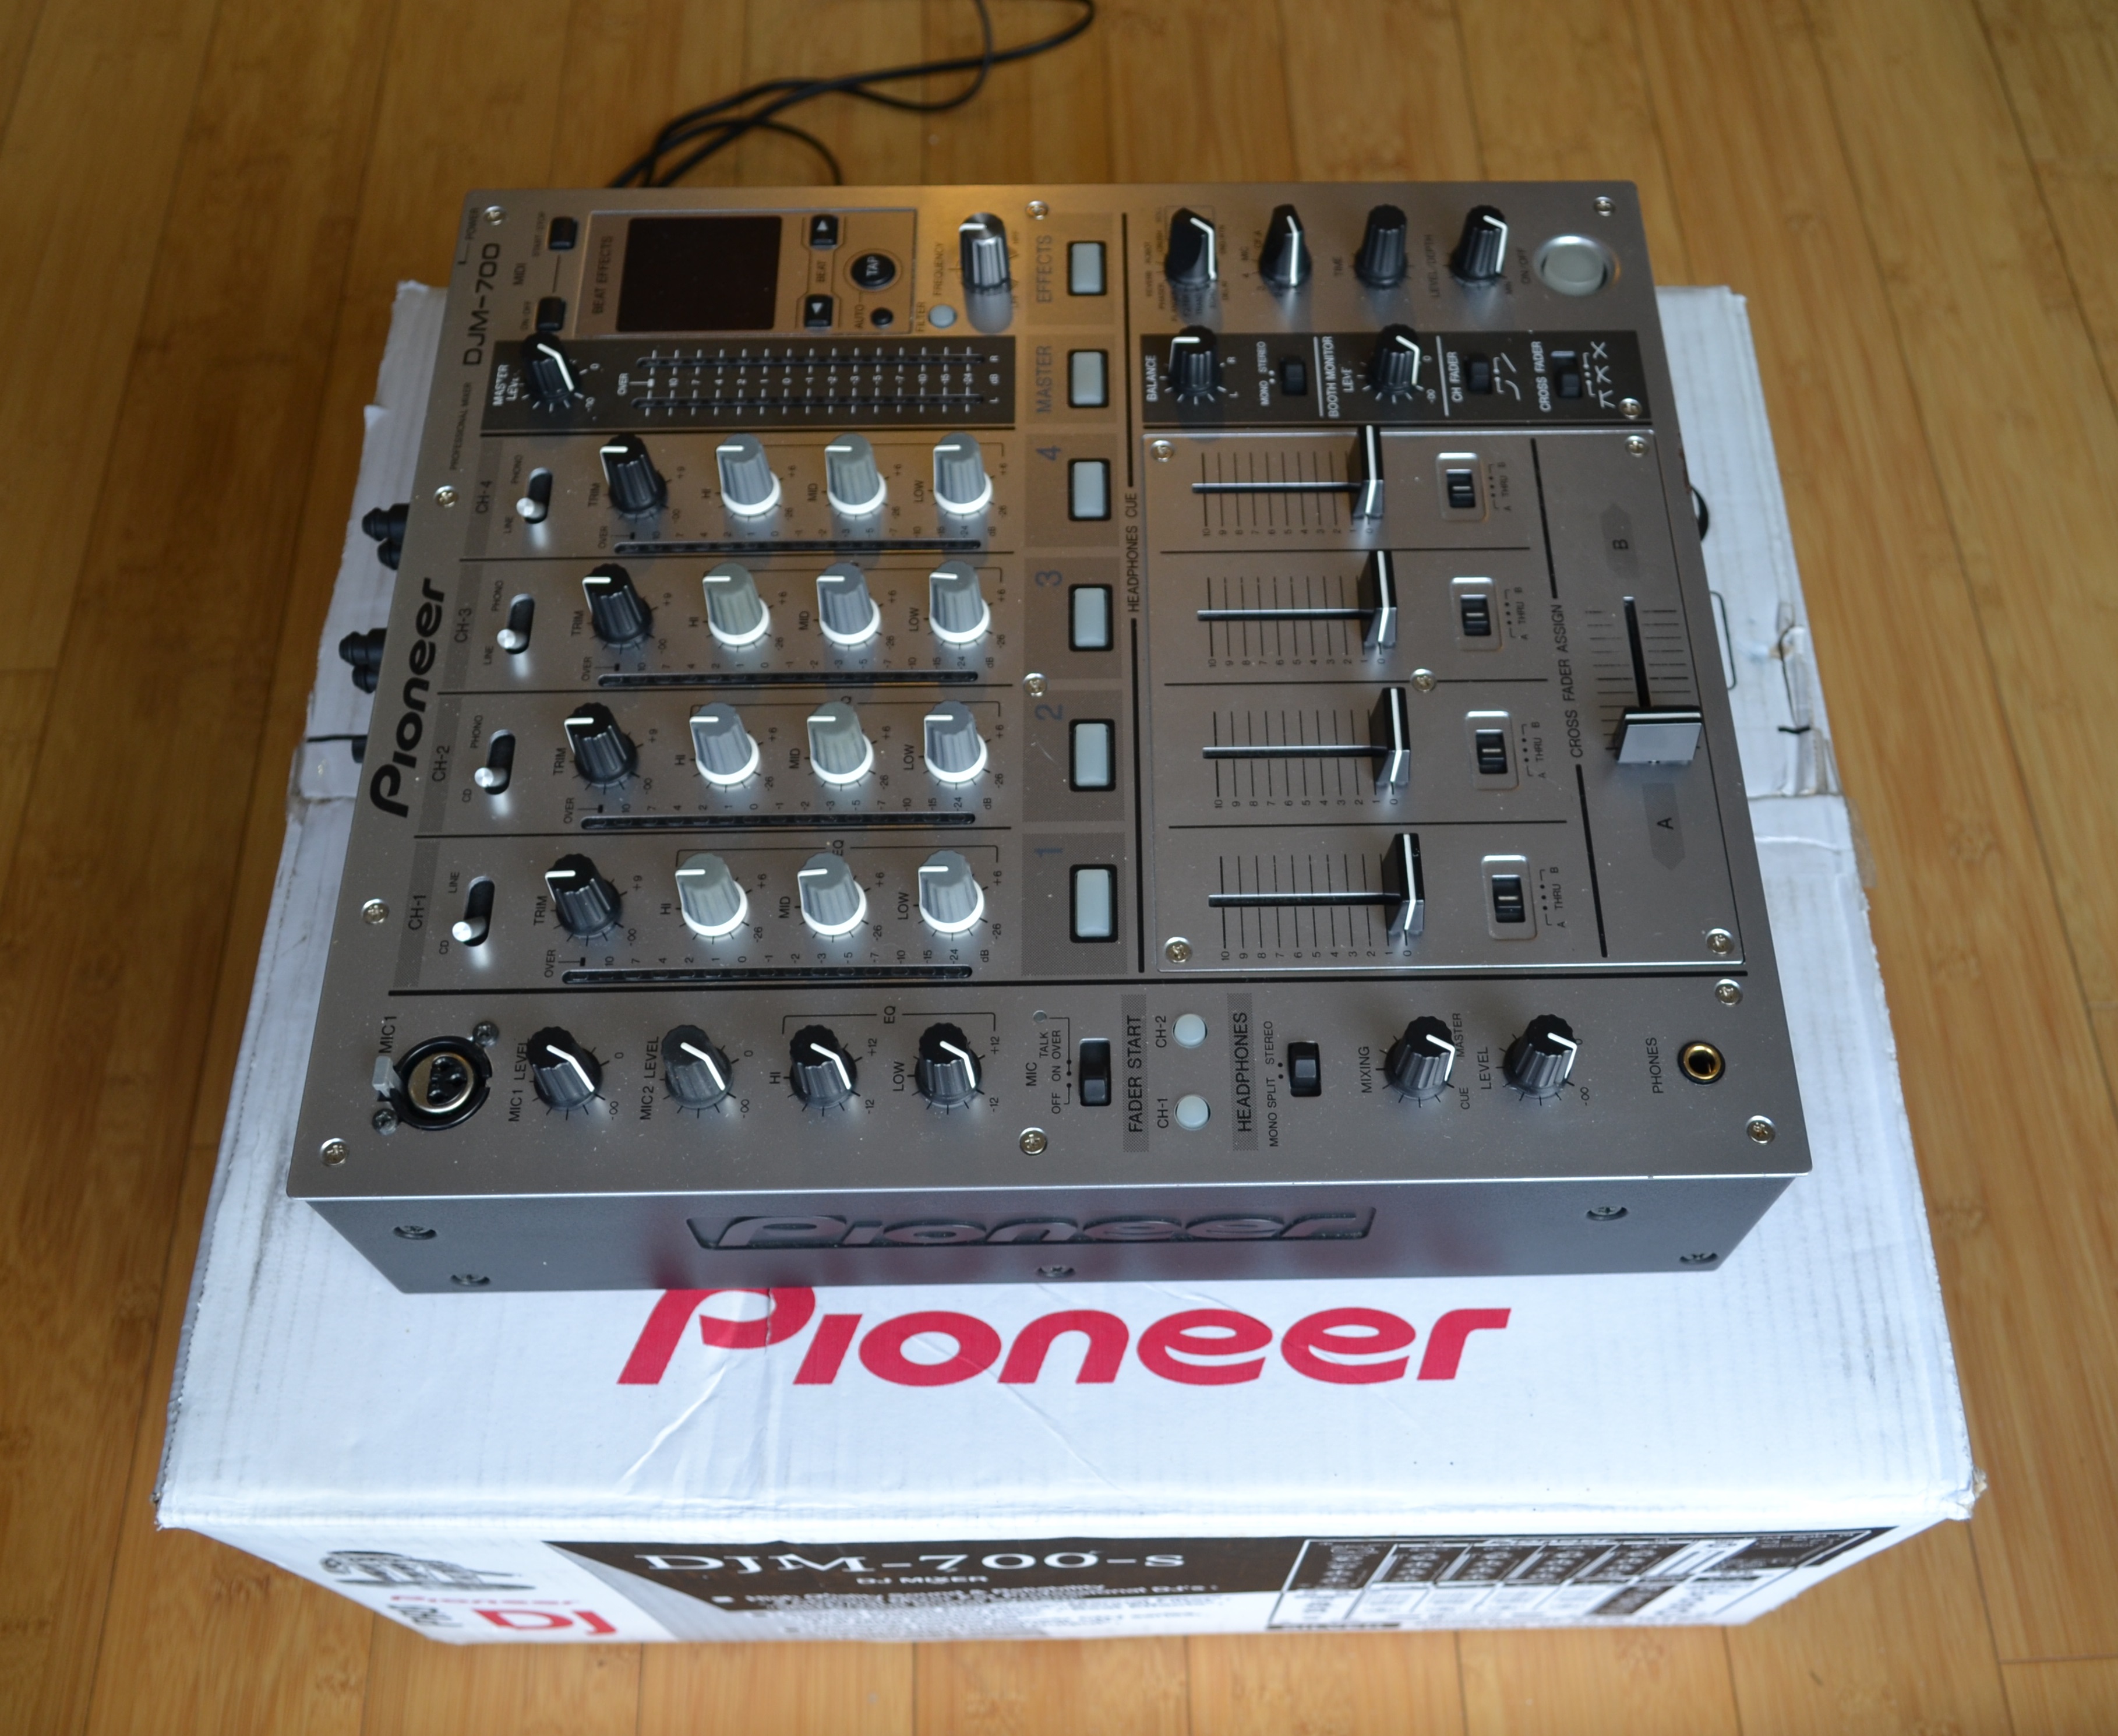 Pioneer DJM-700-K image (#1711494) - Audiofanzine